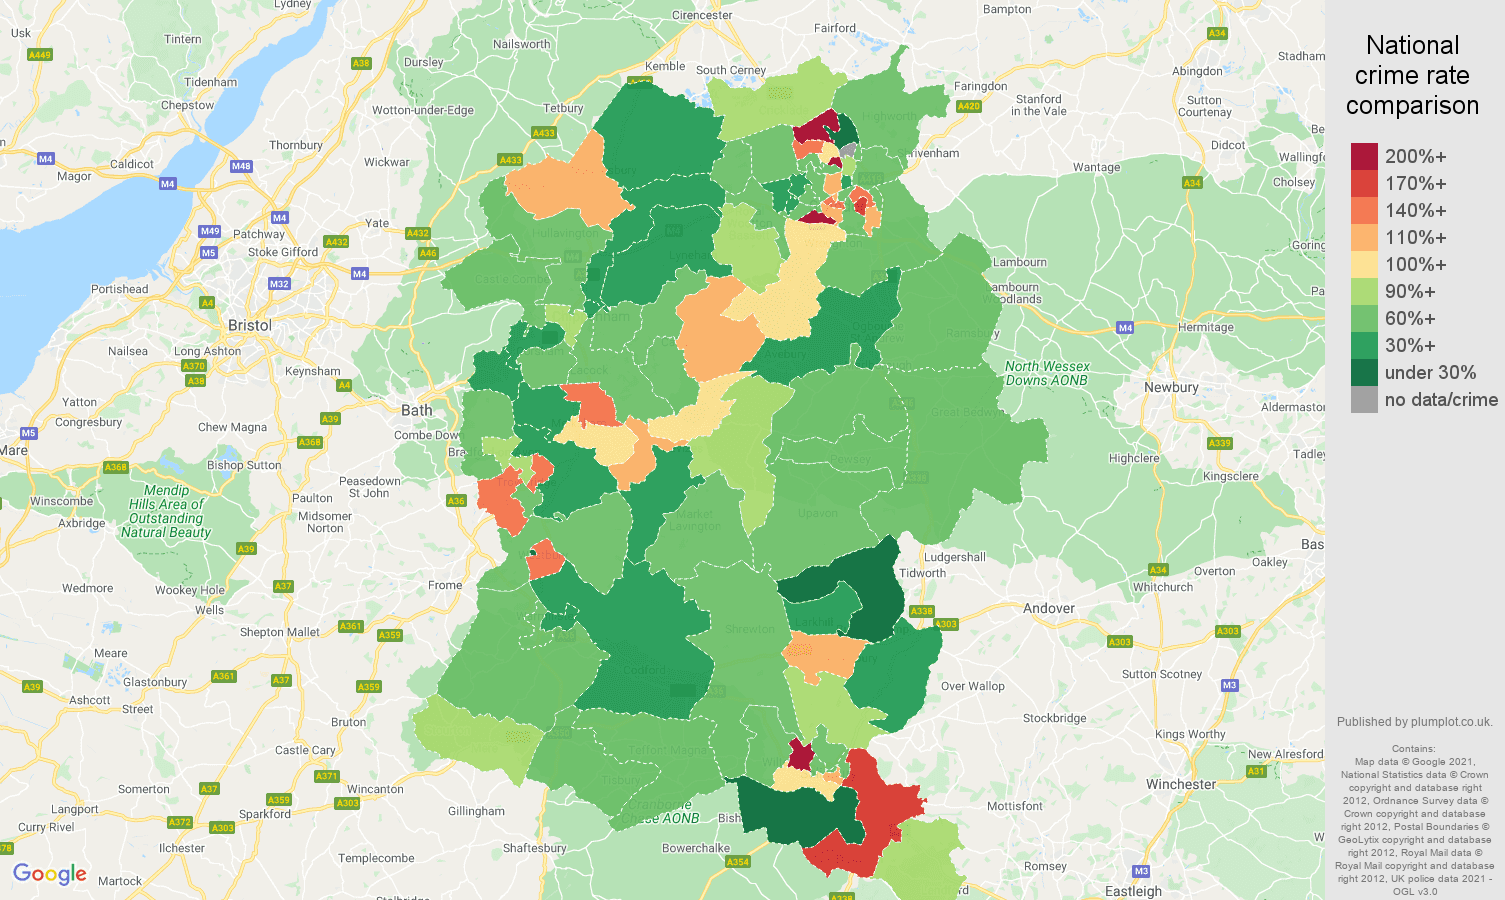 Wiltshire criminal damage and arson crime rate comparison map